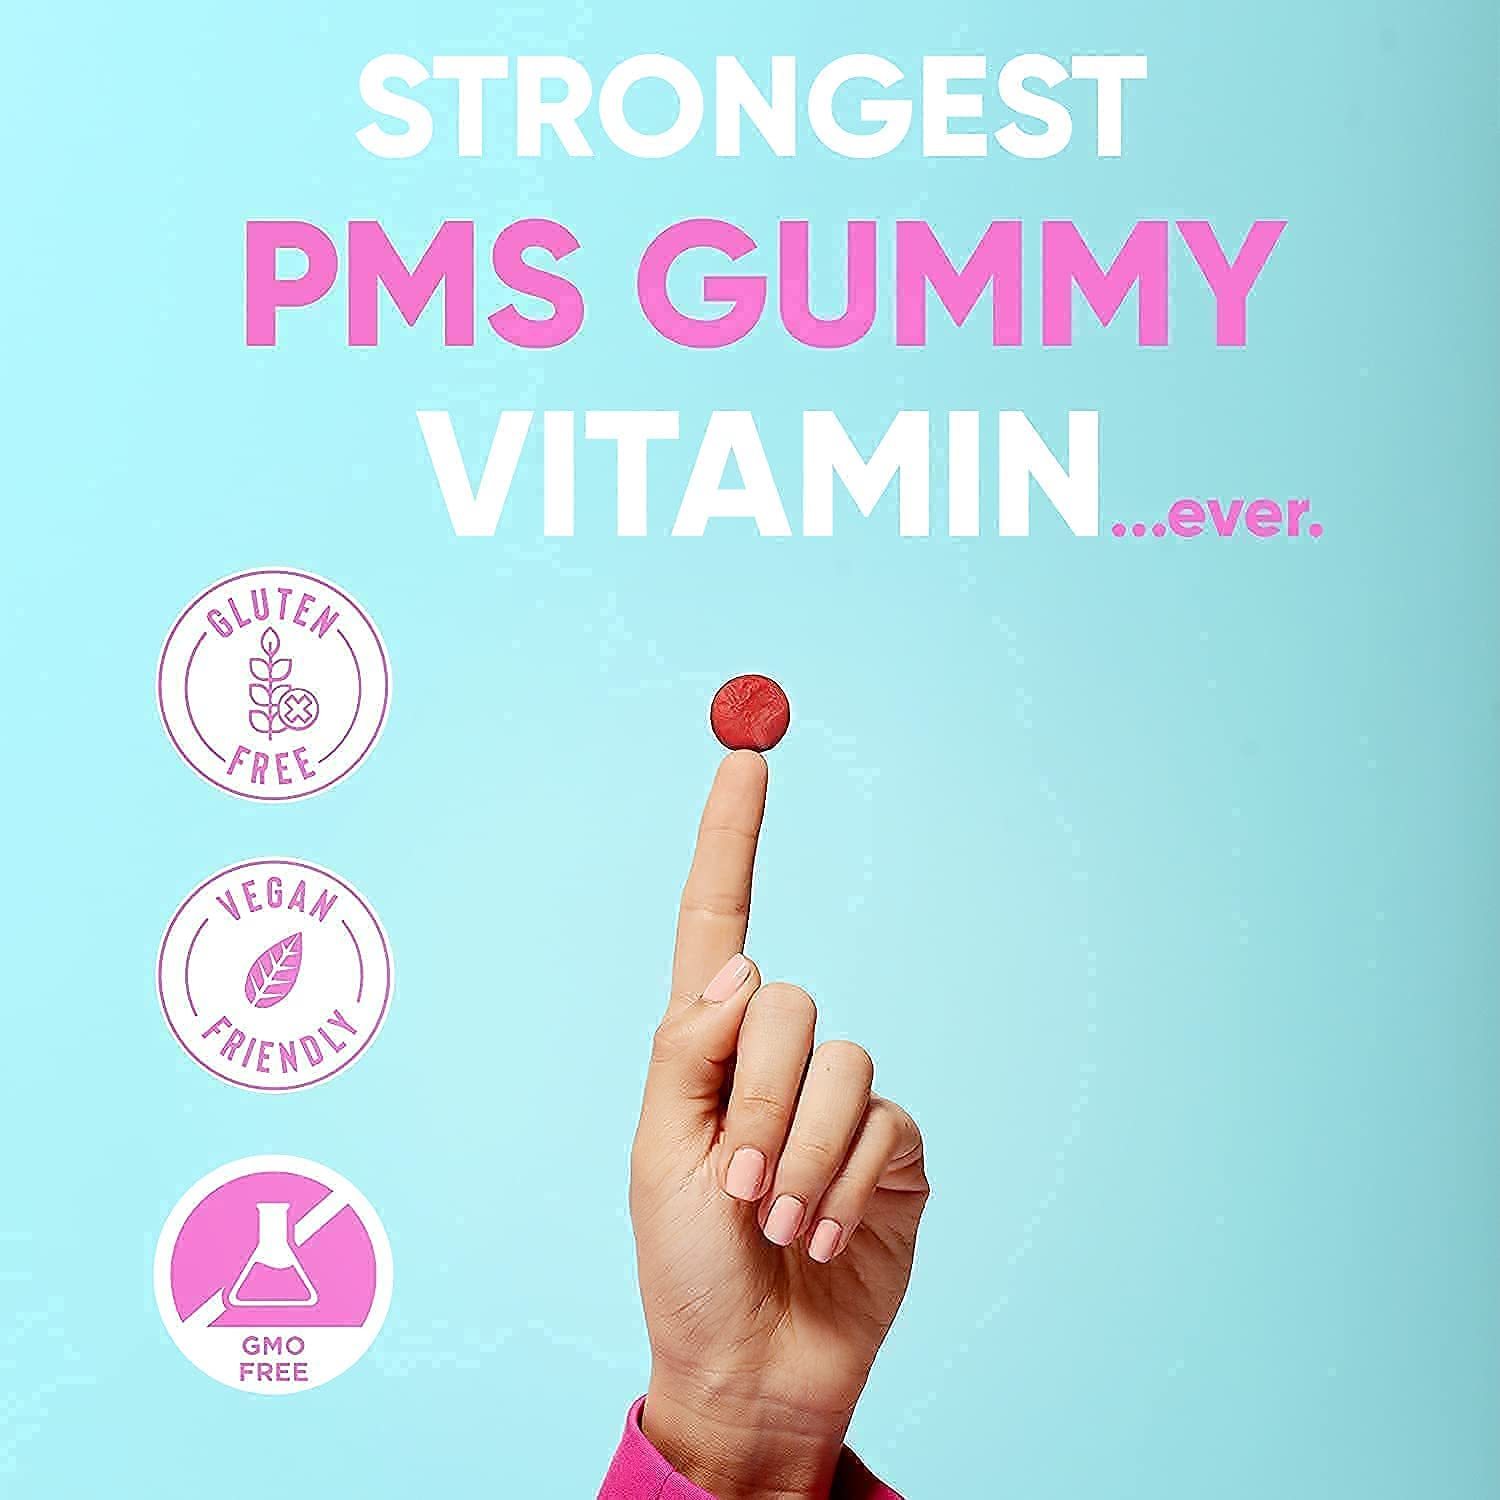 PMS Gummy Vitamins